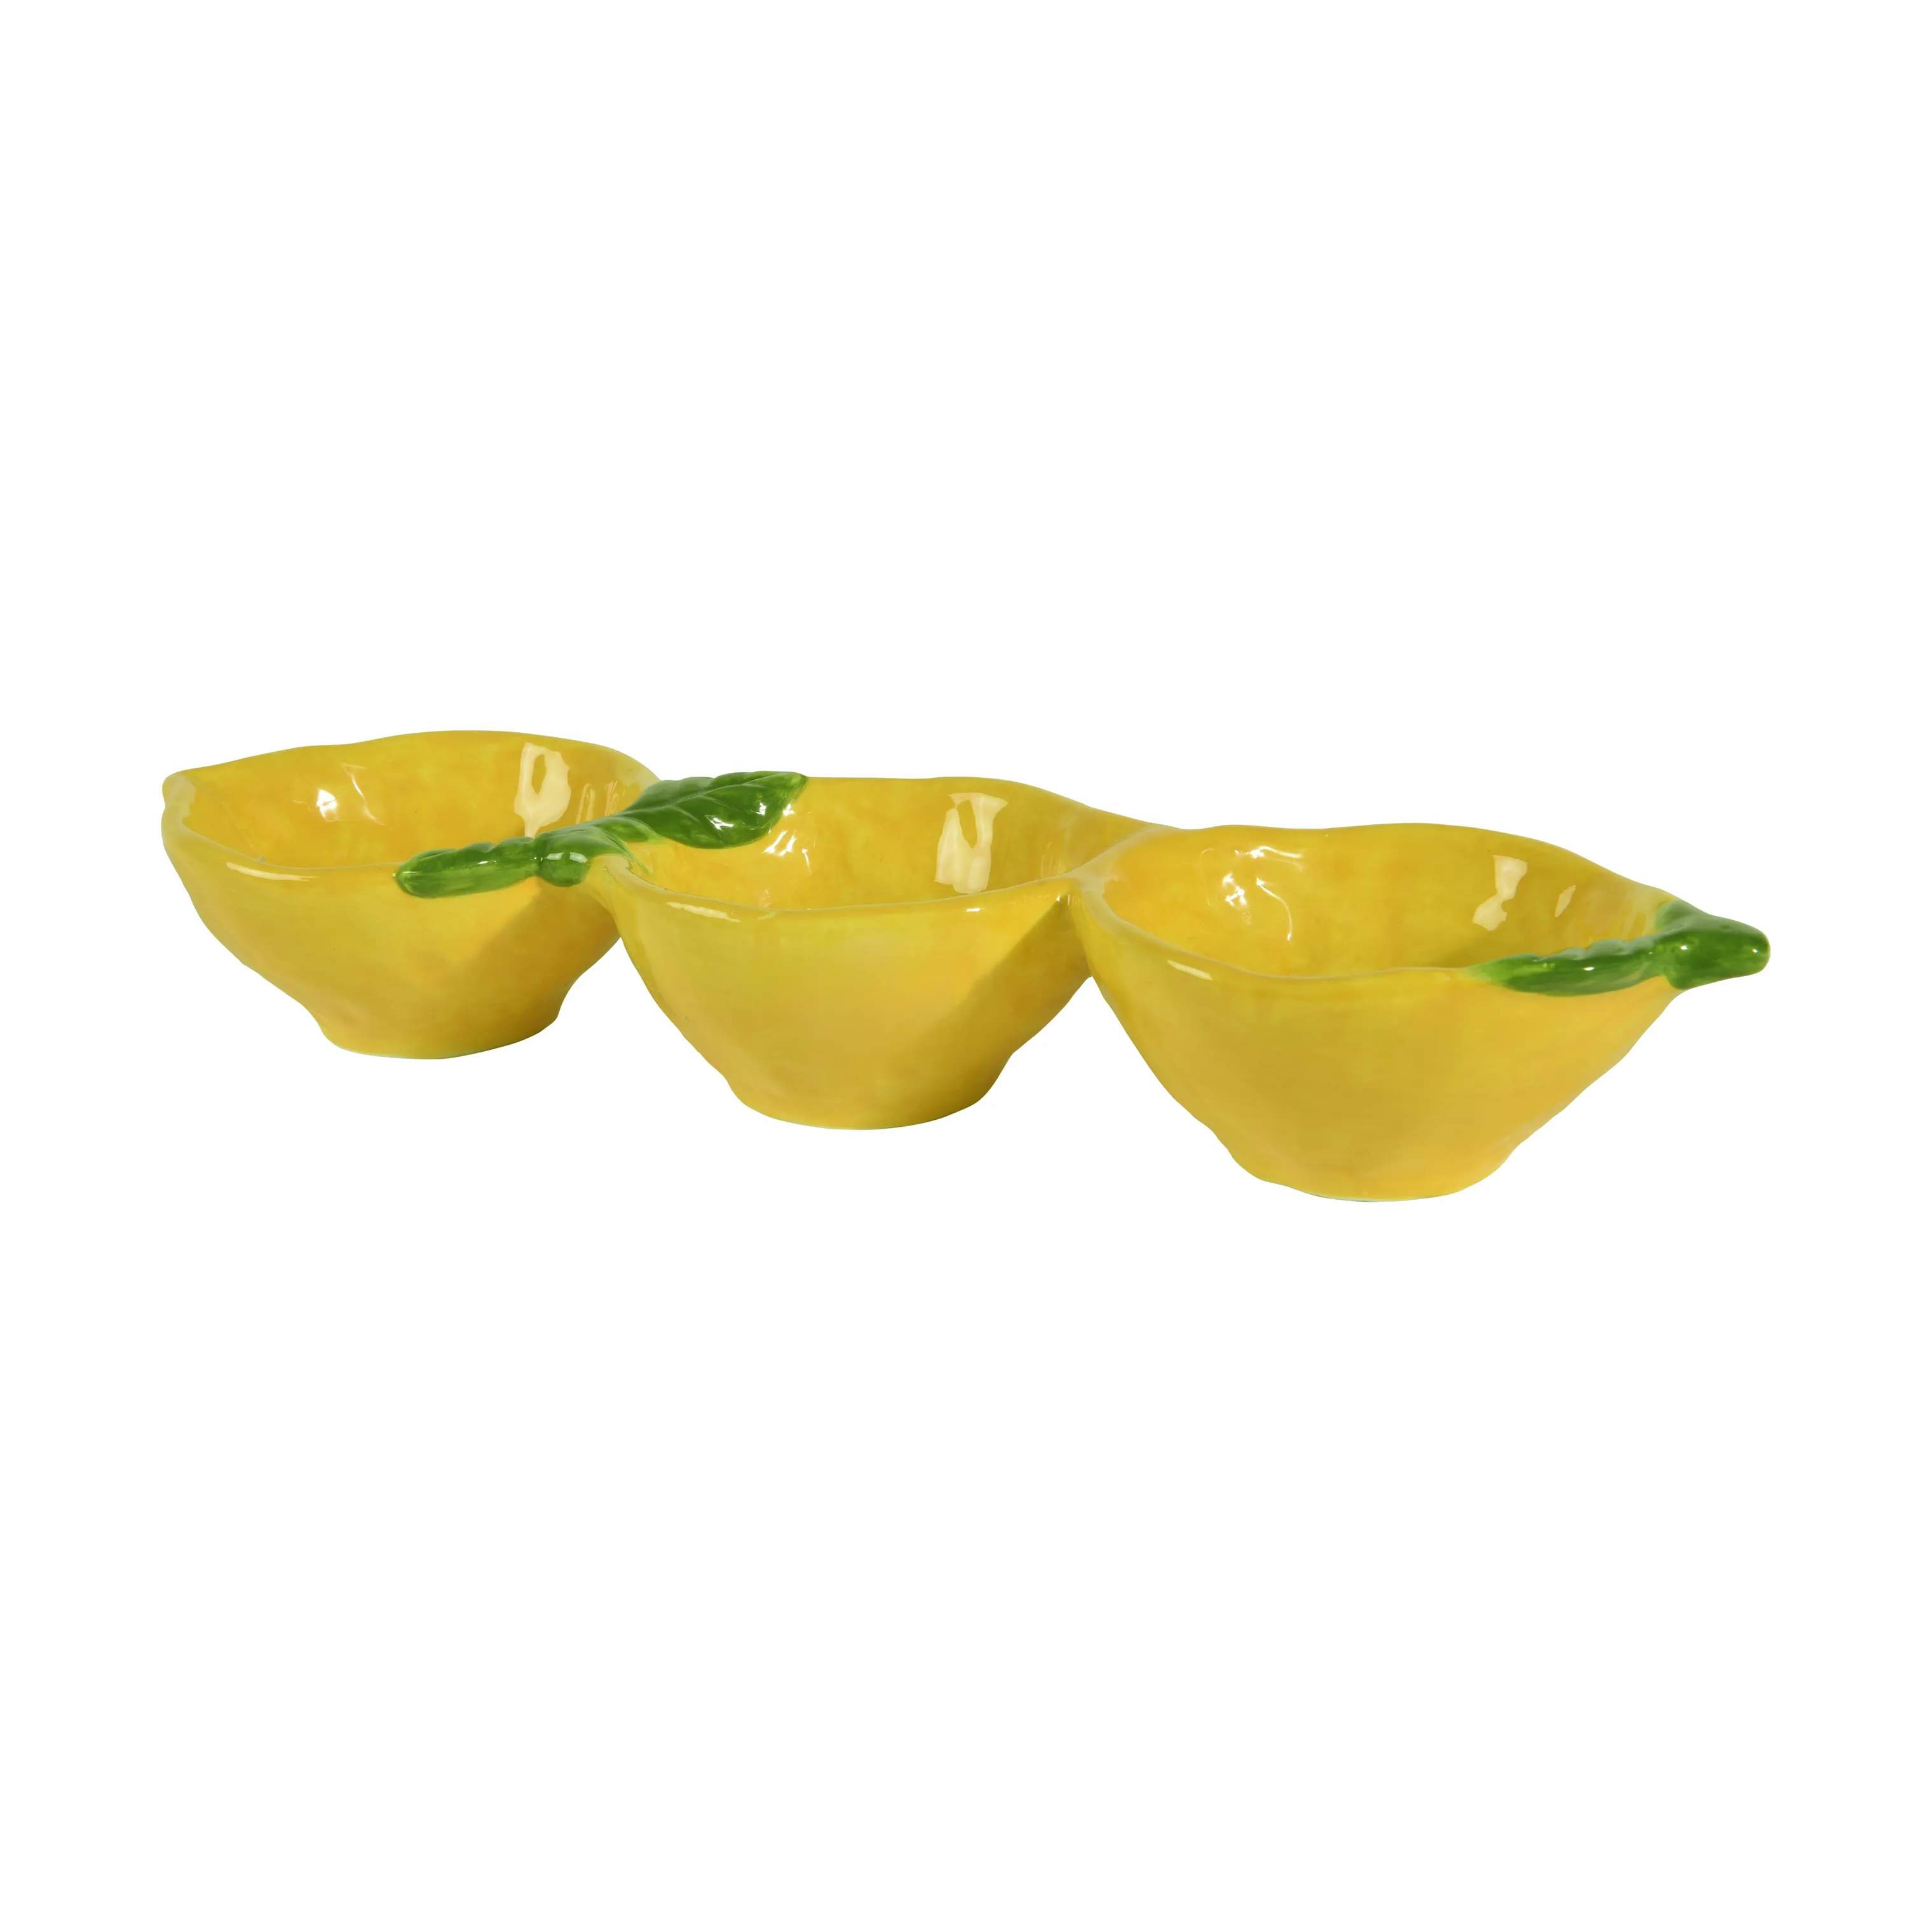 Tapasskål - Citron, gul, large